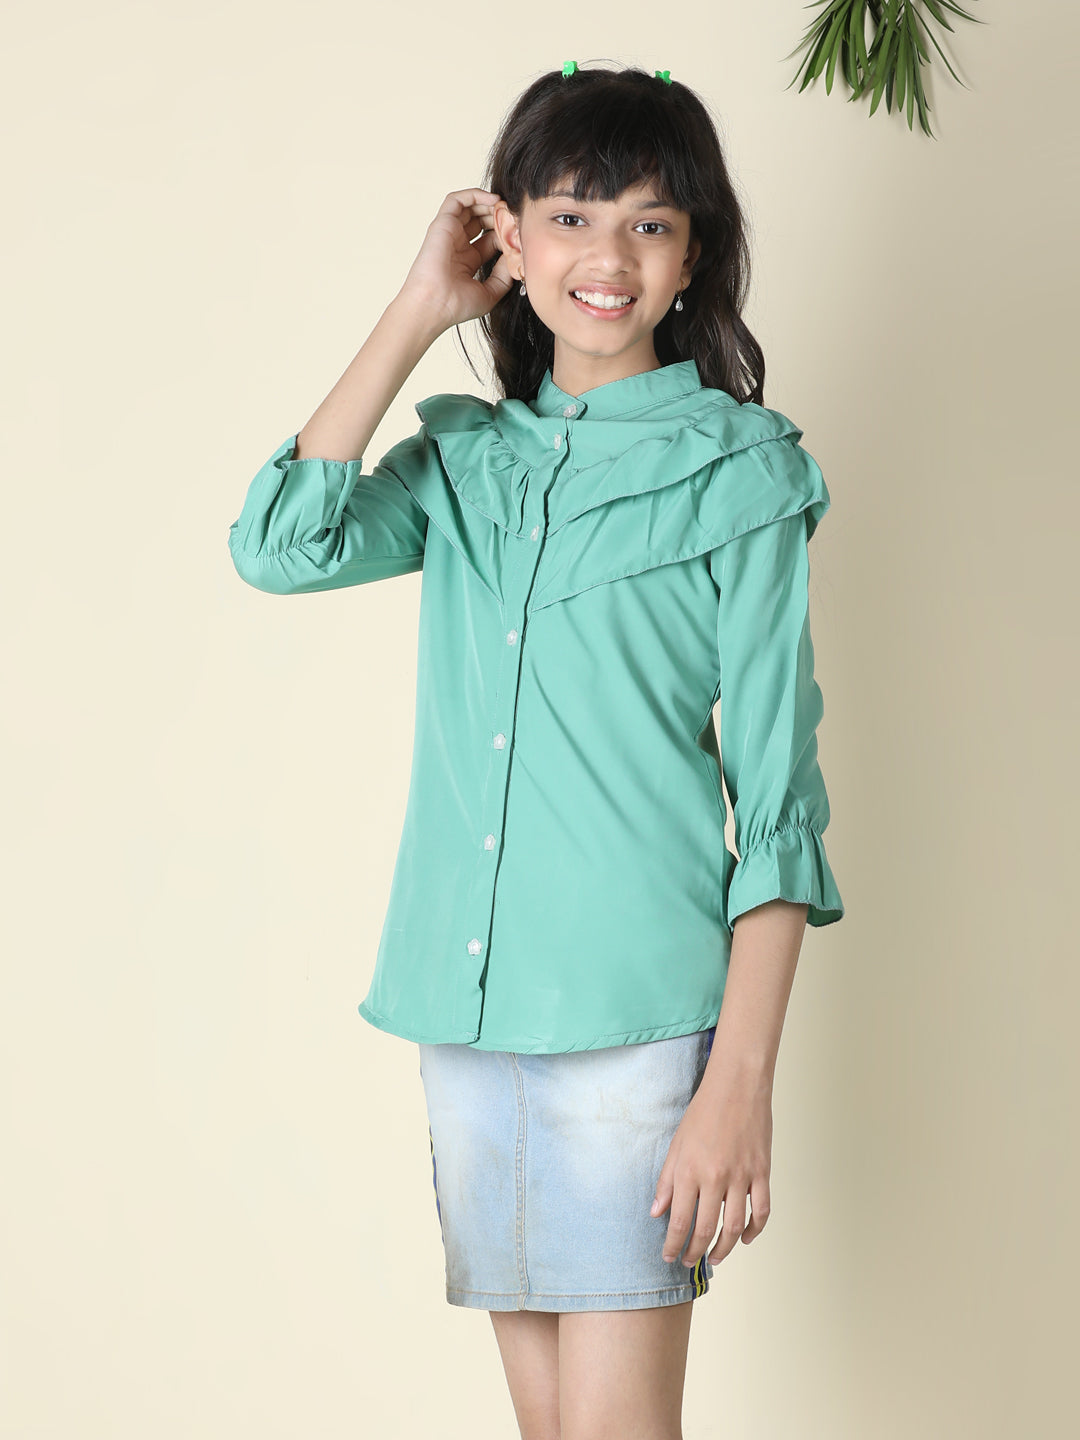 Cutiekins Girls Shirt Style Solid Embellished Top -Sea Green